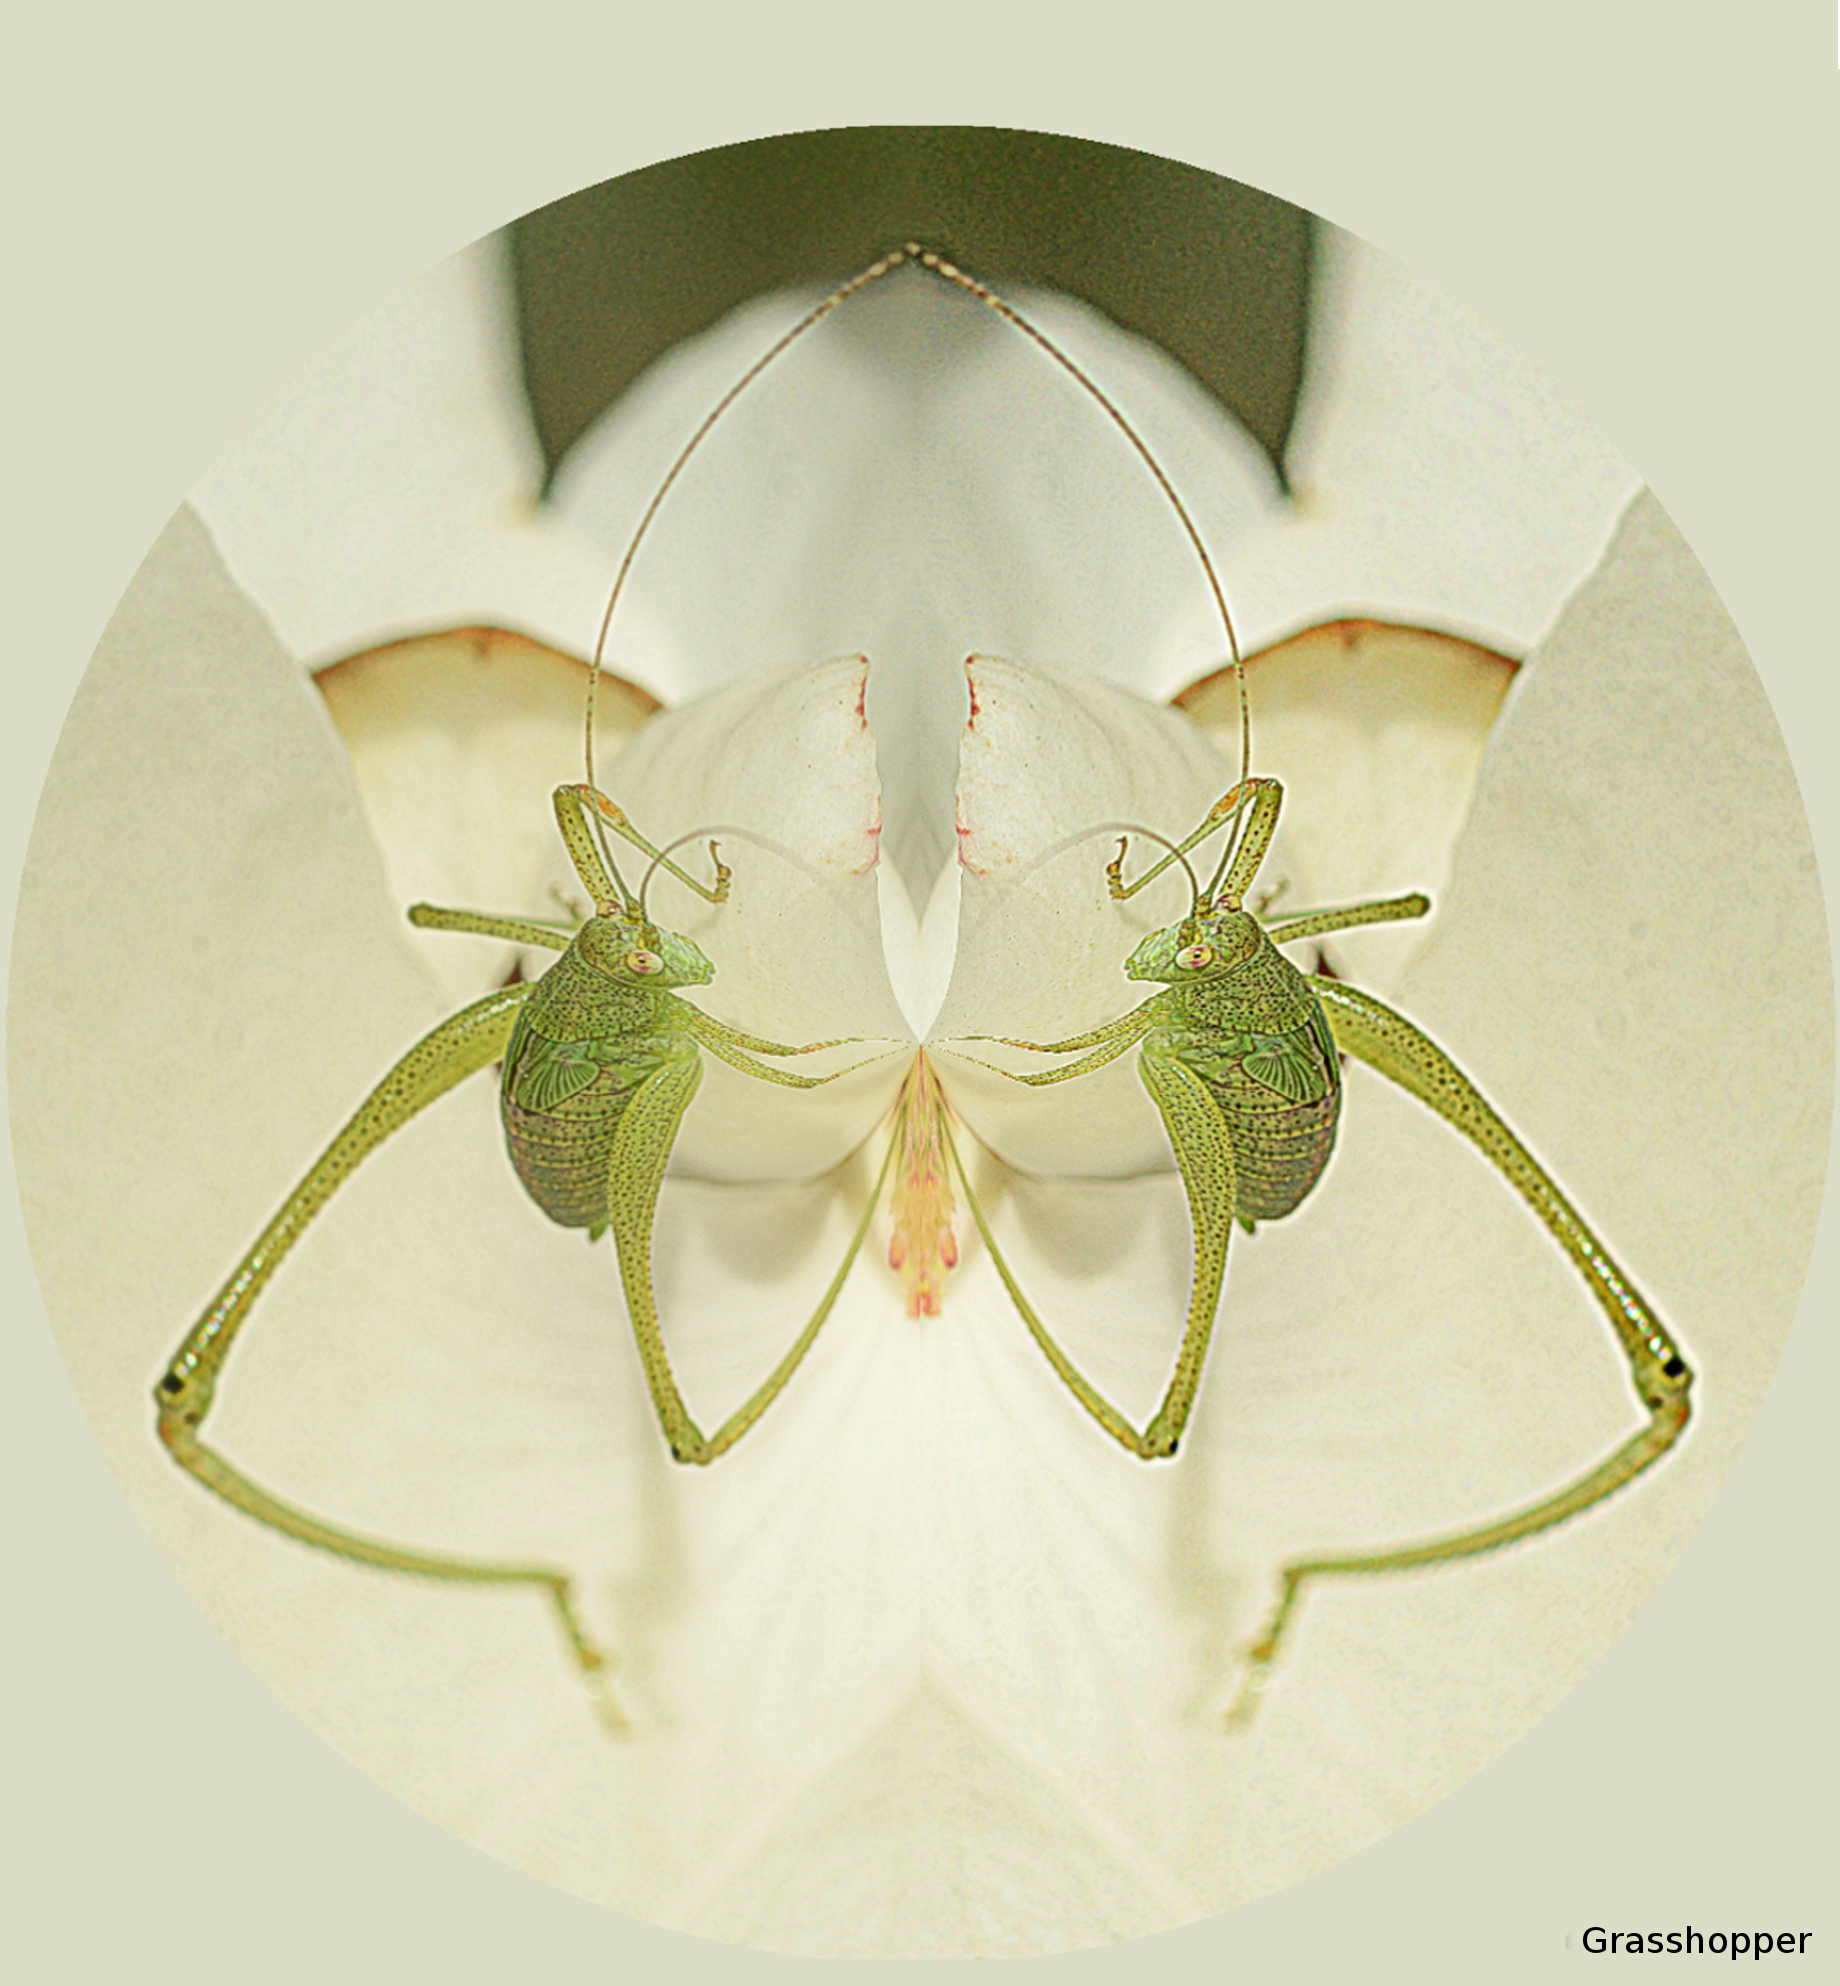 grasshopper-DSC_7395 16x20 AT small.jpg